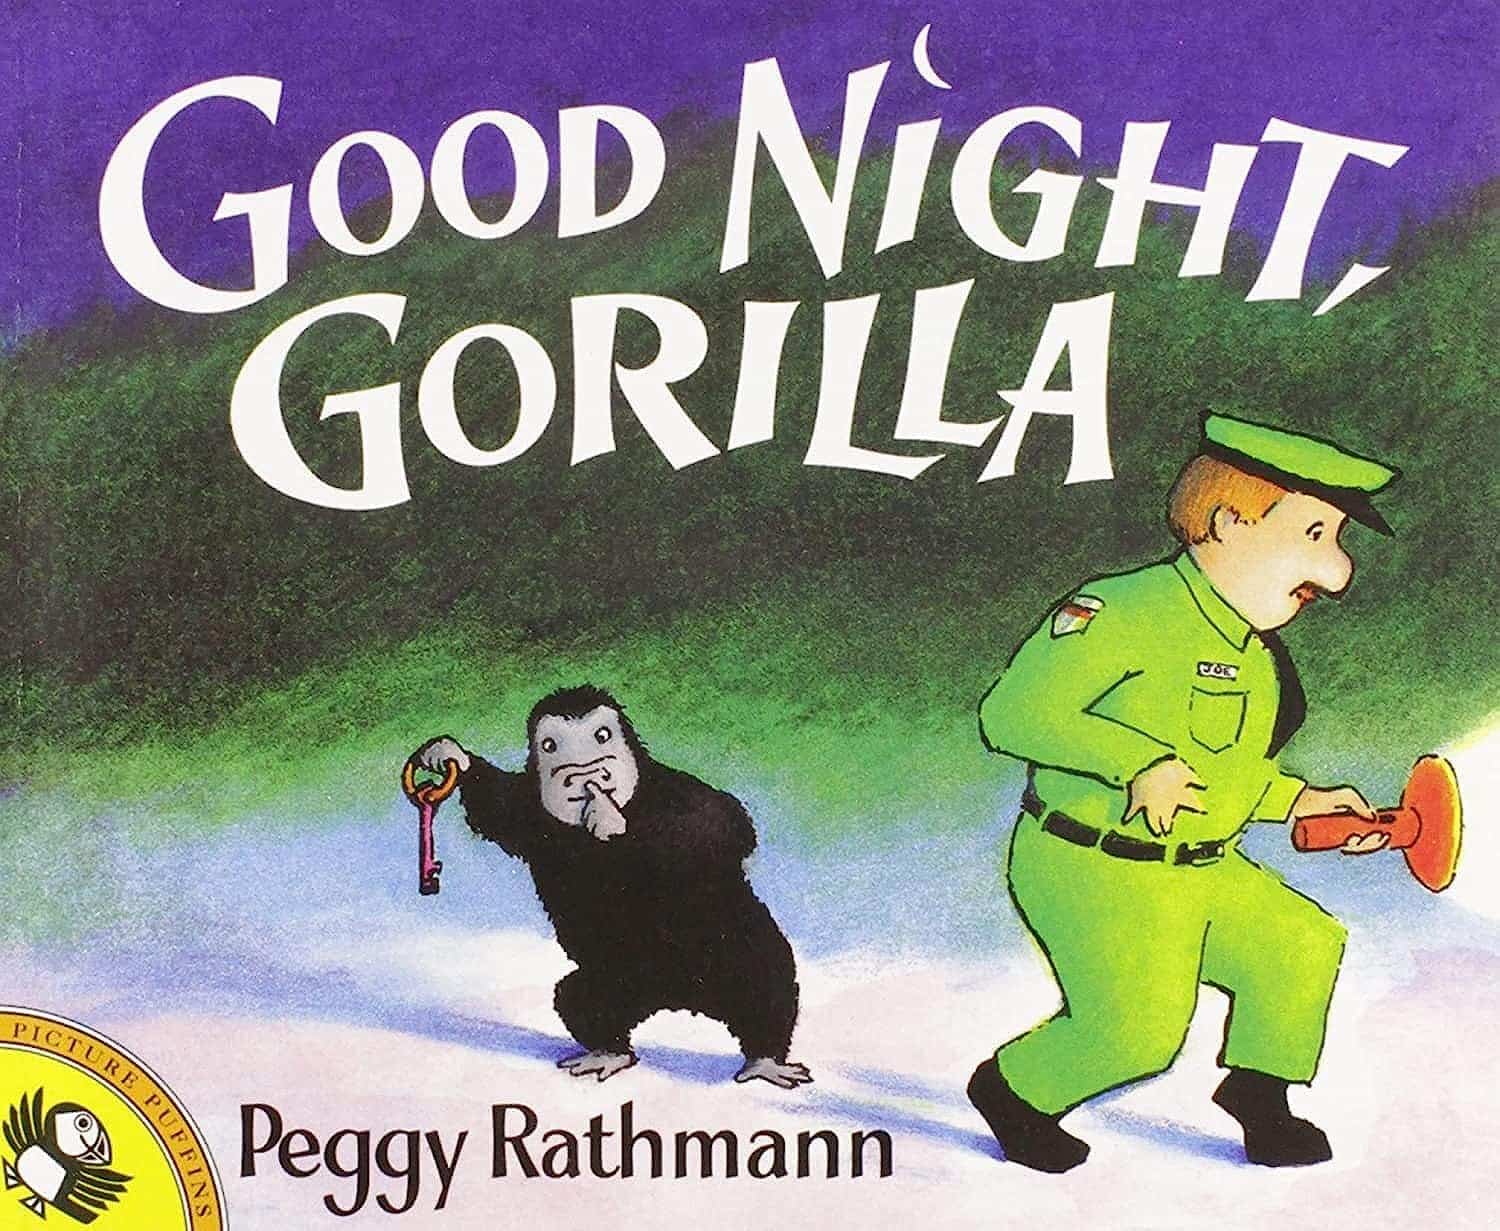 Good night, Gorilla by Peggy Rathmann